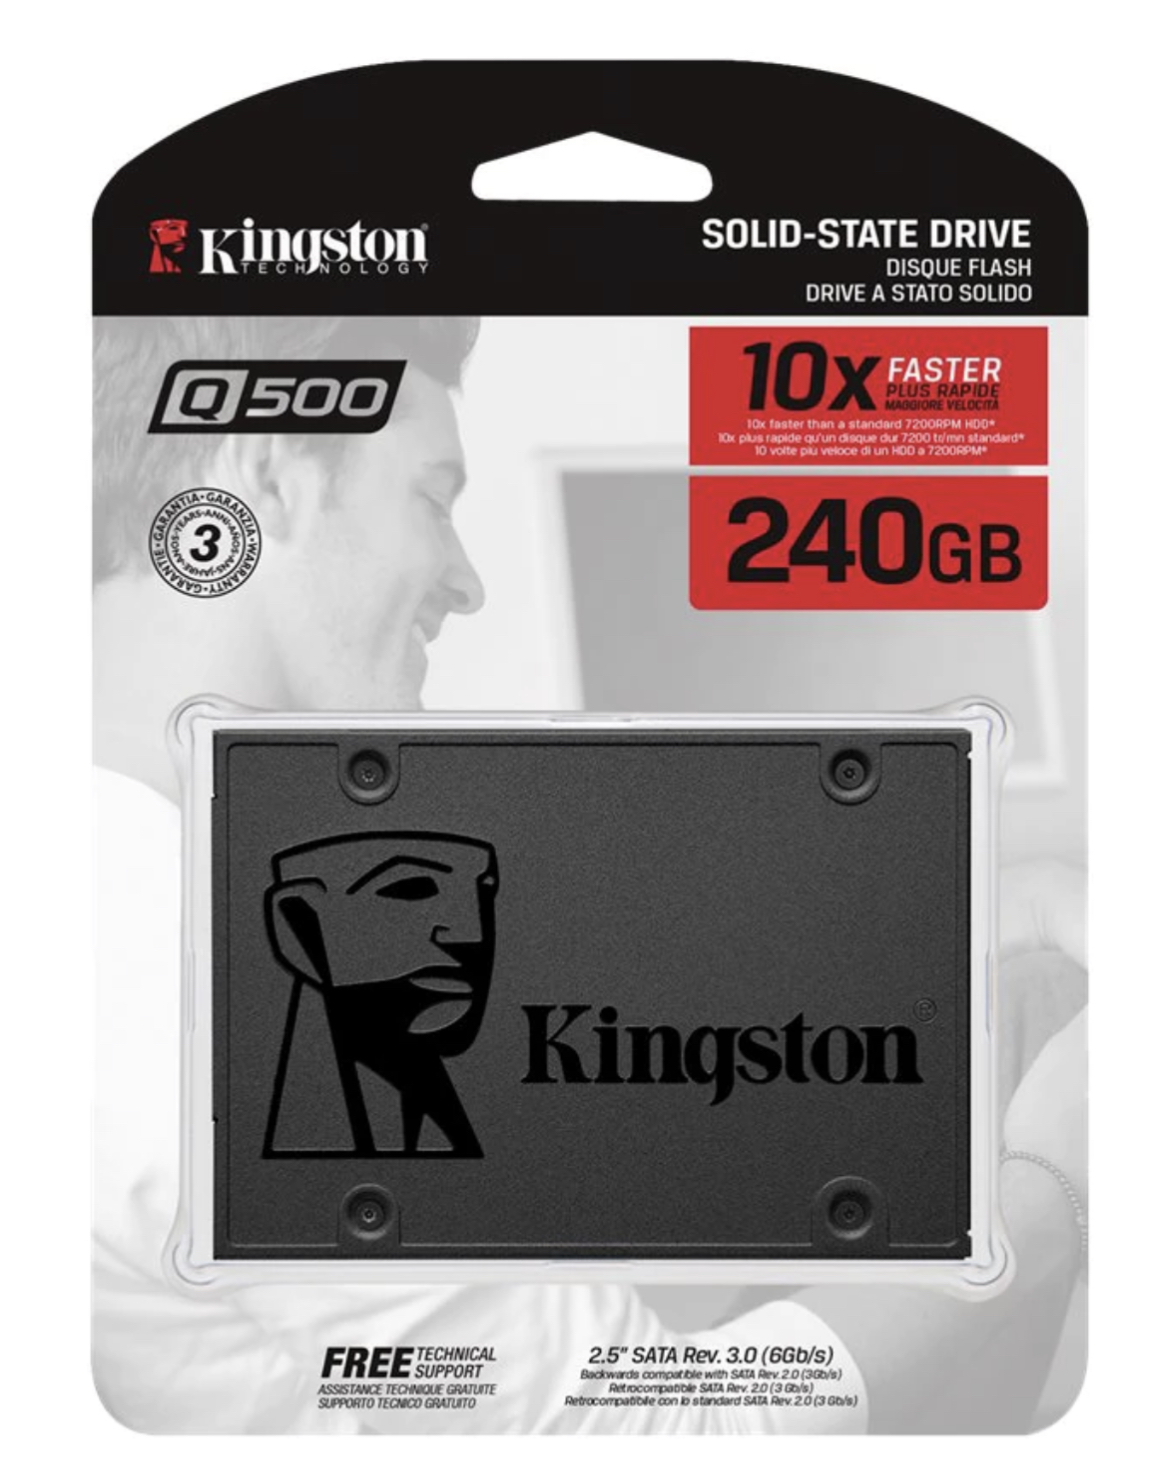 Kingston 240GB Q500 SATA 6Gb s 2.5" Internal SSD - $14.95 & FREE SHIPPING